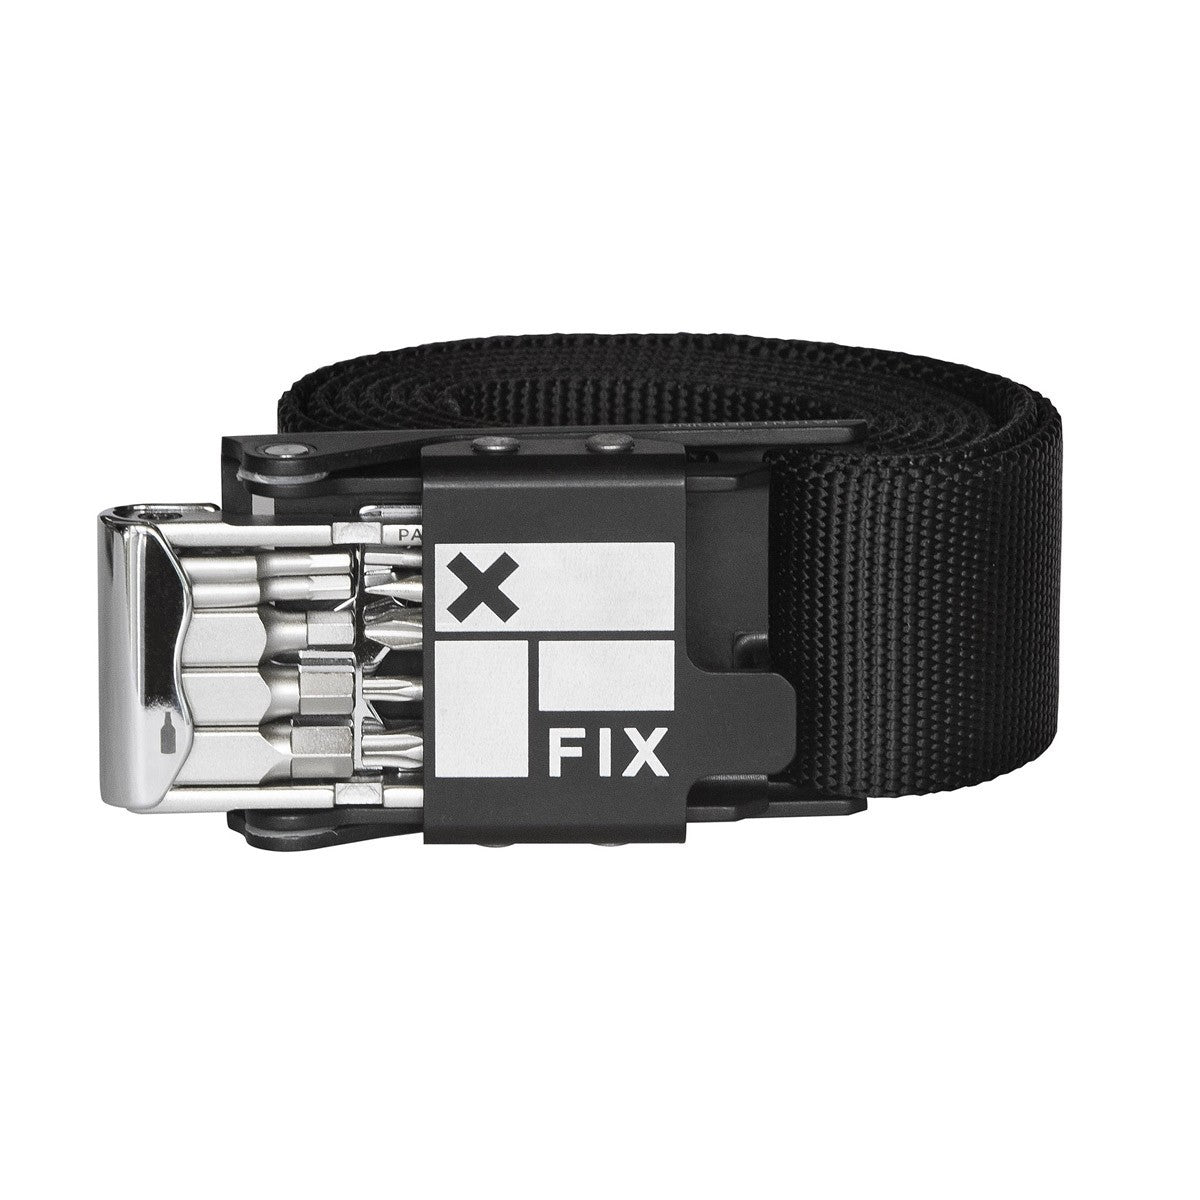 Fix Mfg - Cinturón All Time - Negro